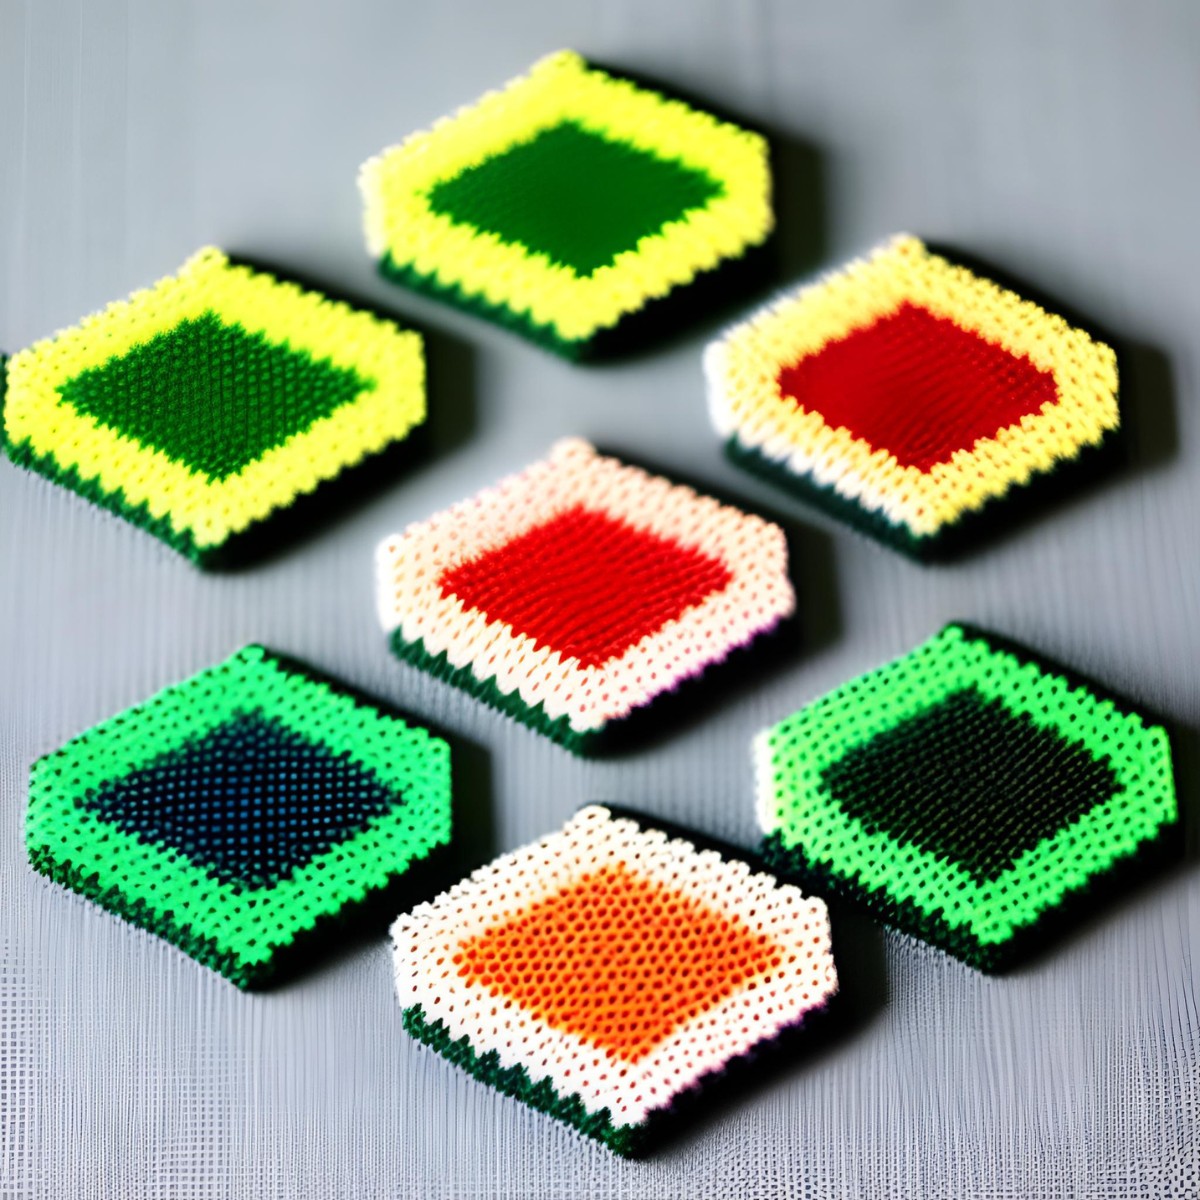 10 Hexagon Perler Bead Patterns That Brings Creativity - DIY Crafts